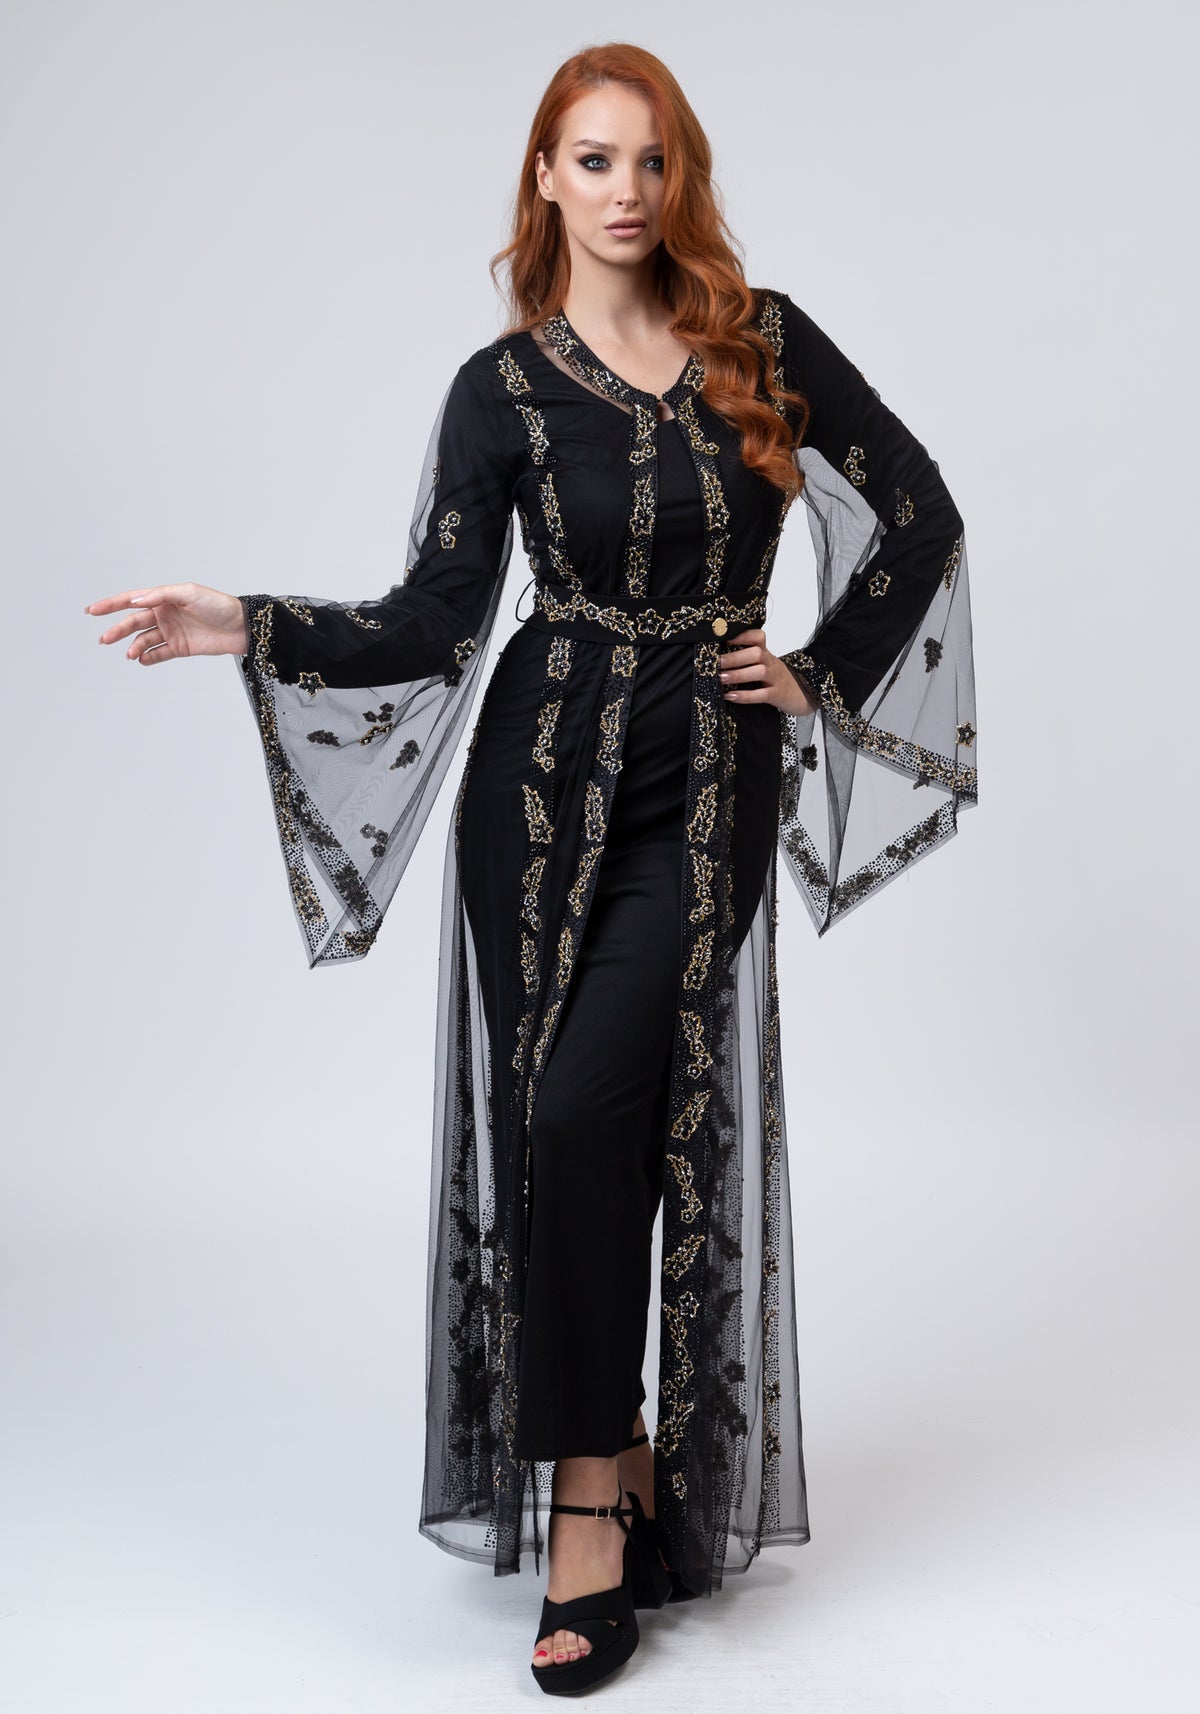 Long black dress with lace cape